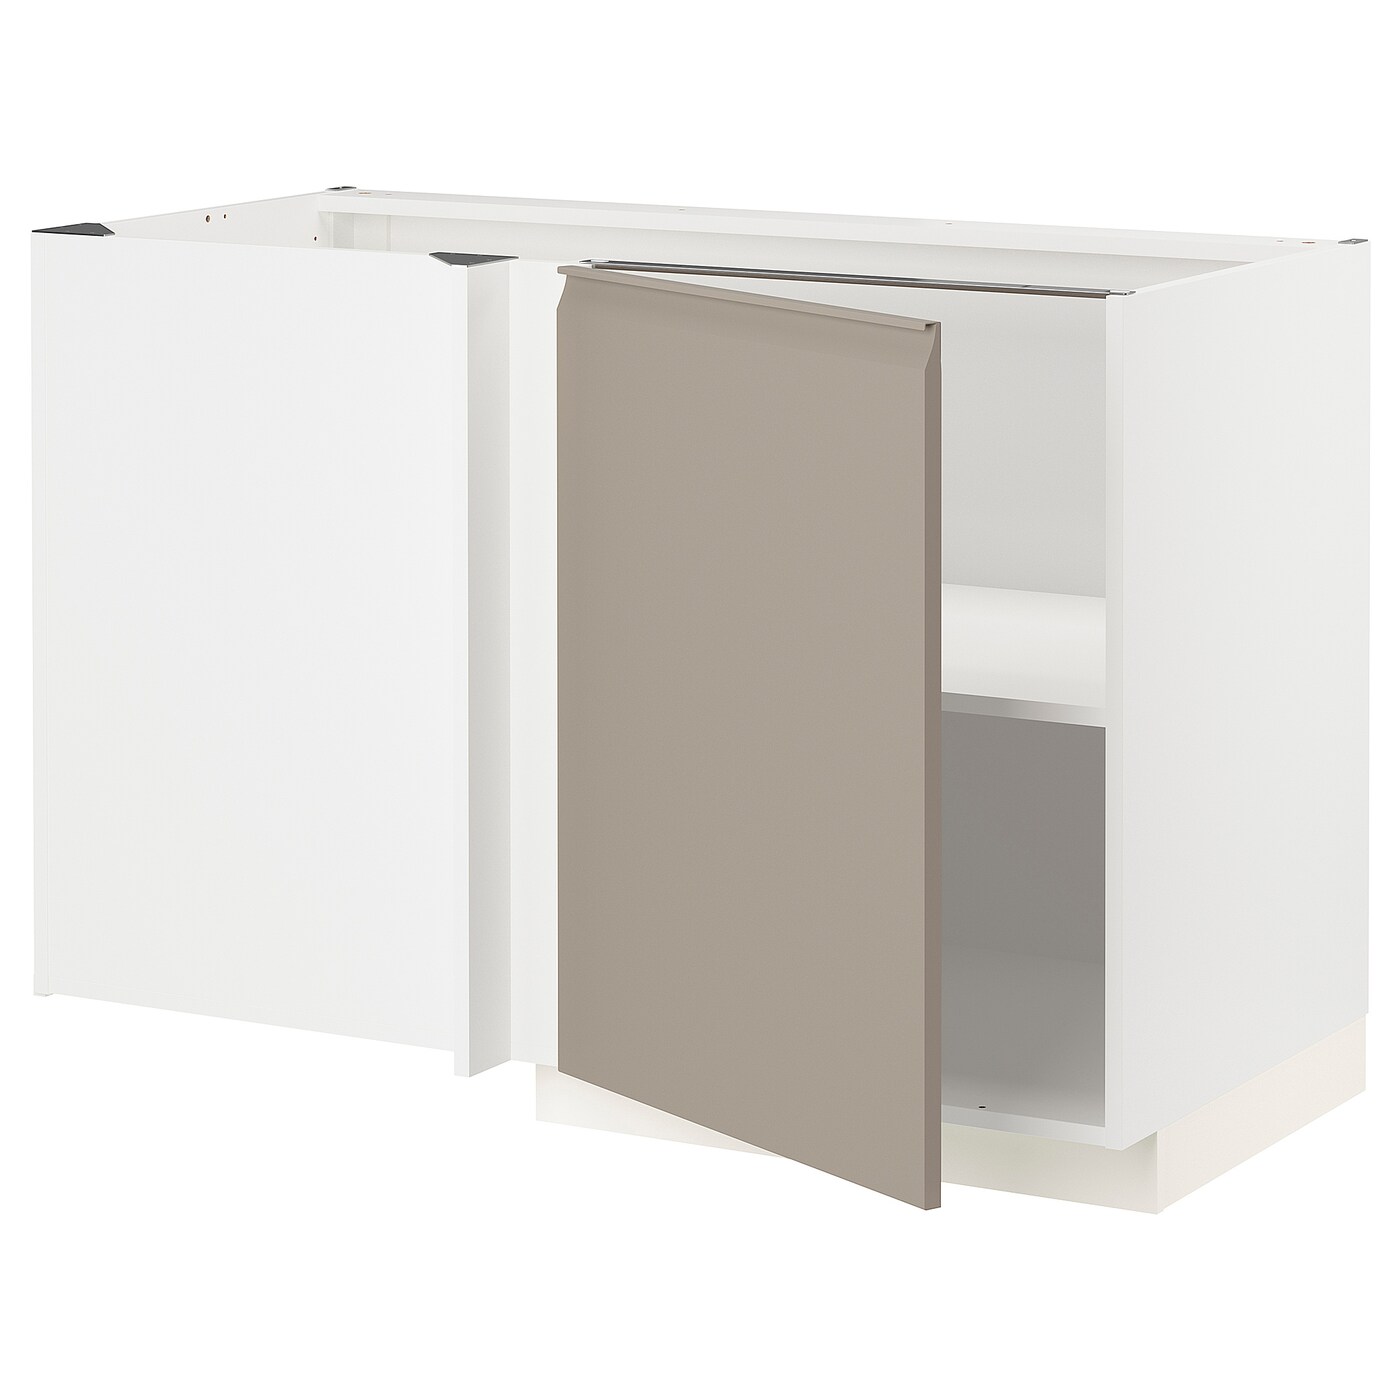 Напольный шкаф - METOD IKEA/ МЕТОД ИКЕА,  128х68 см, белый/бежевый